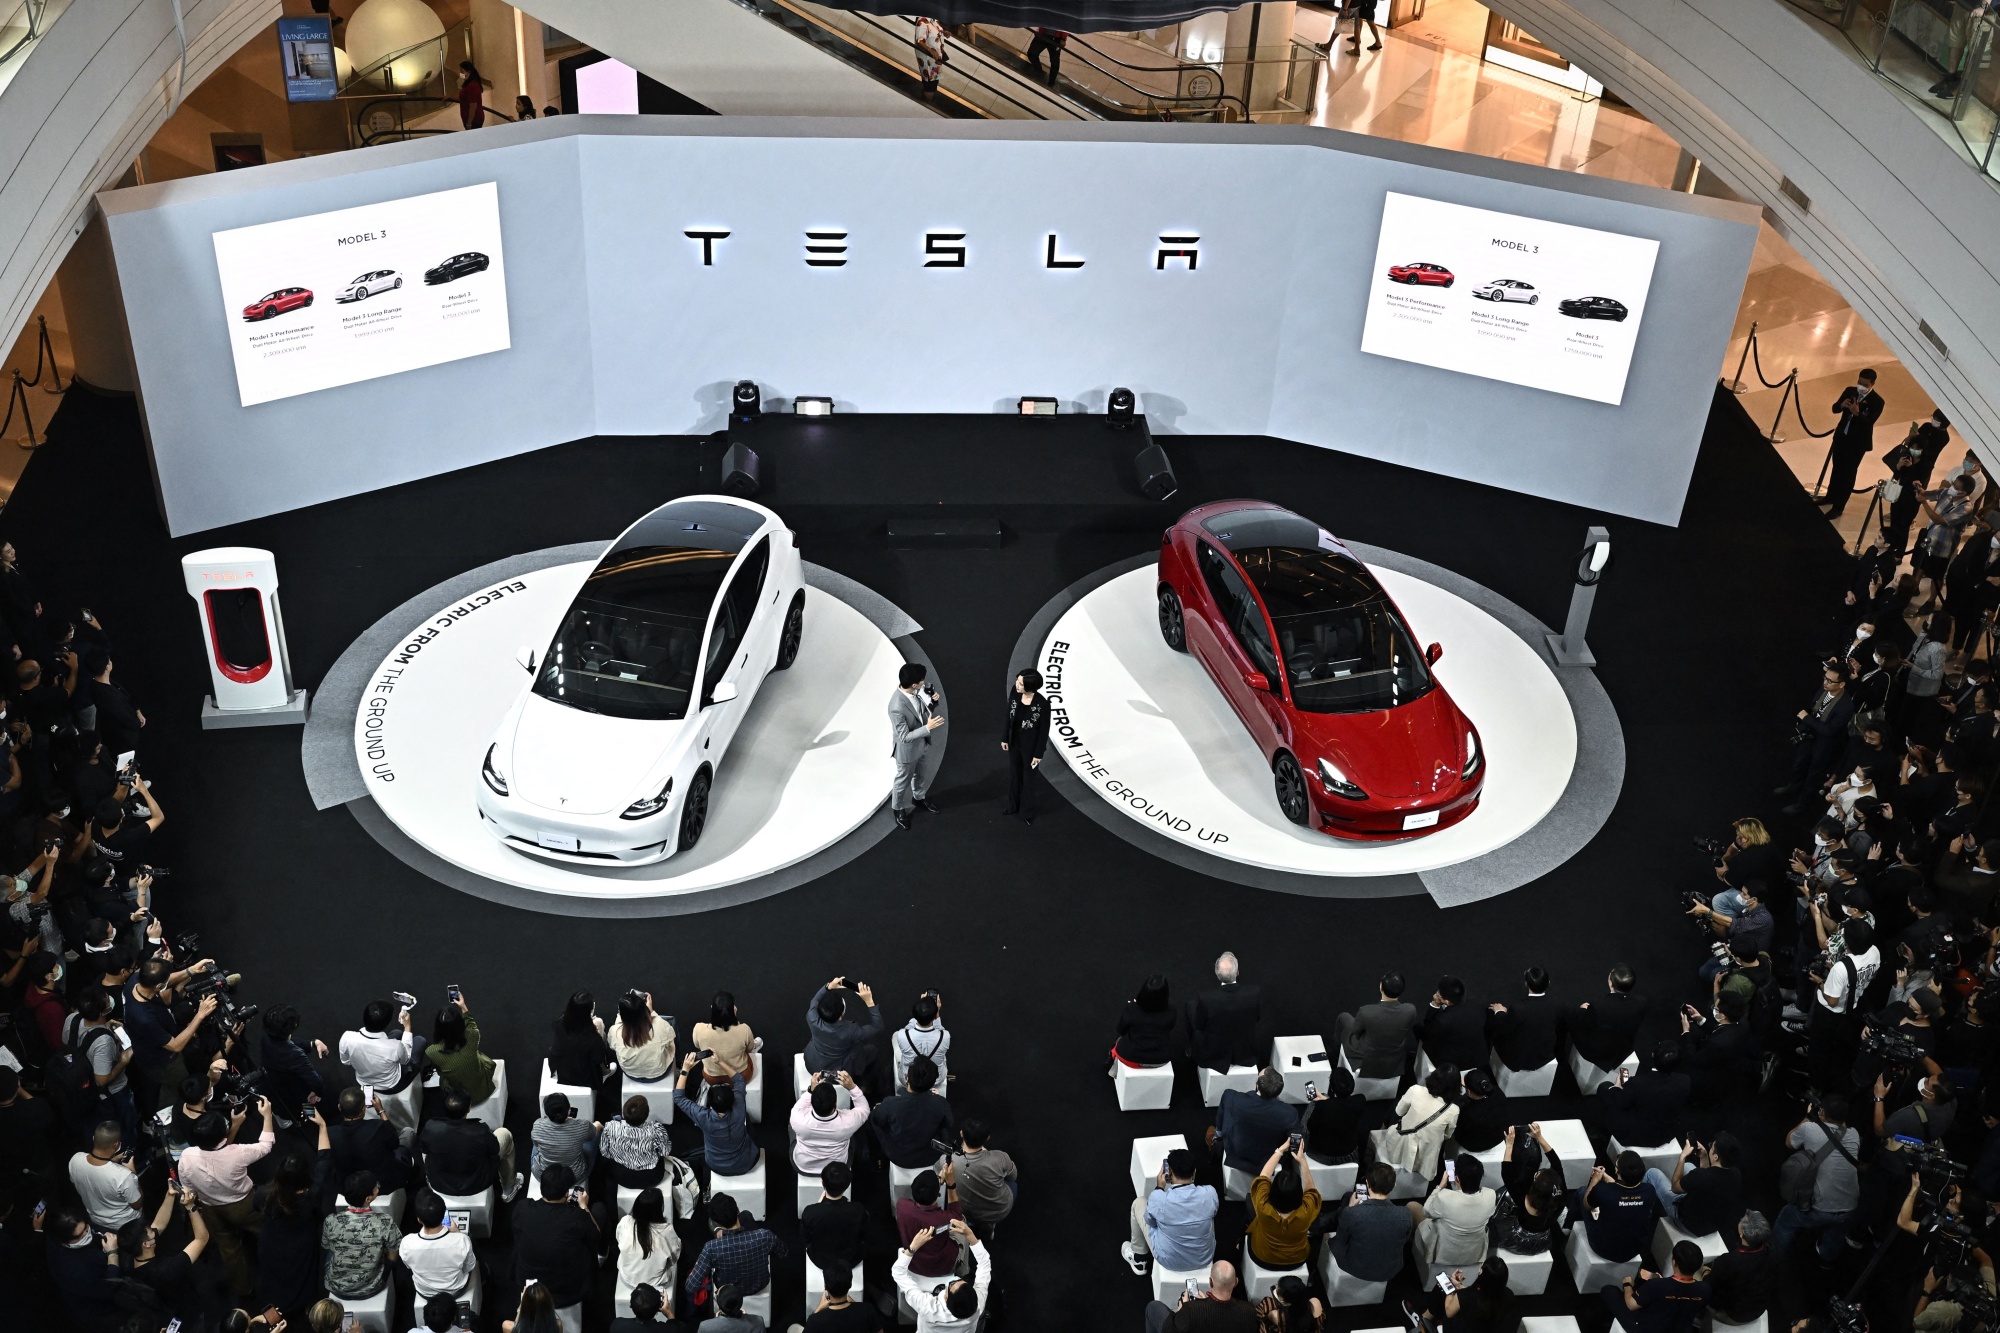 Tesla Tests the Limits of Elon Musk's Minimal Model Strategy